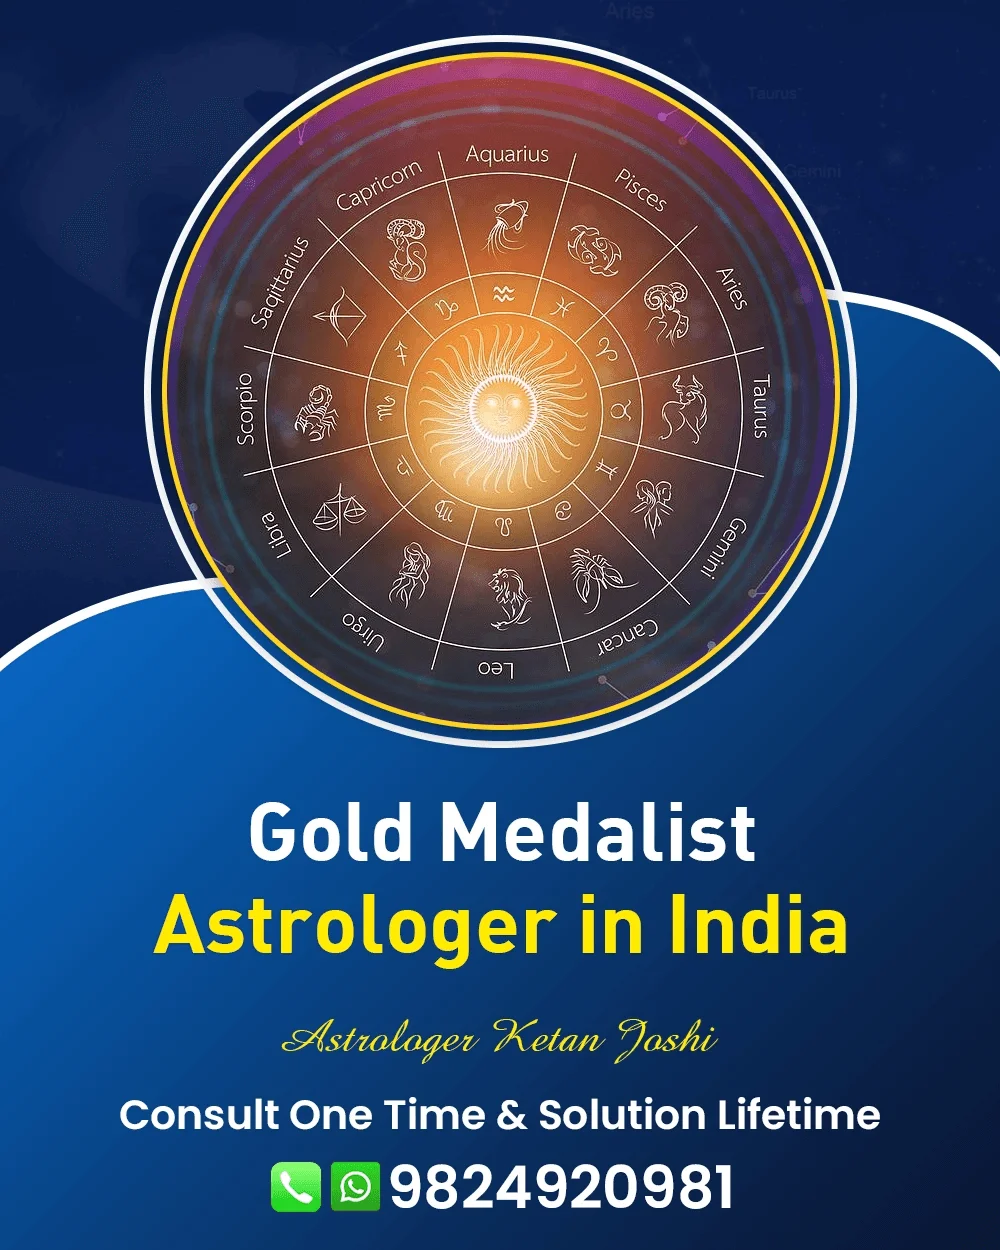 Best Astrologer In Ranchi